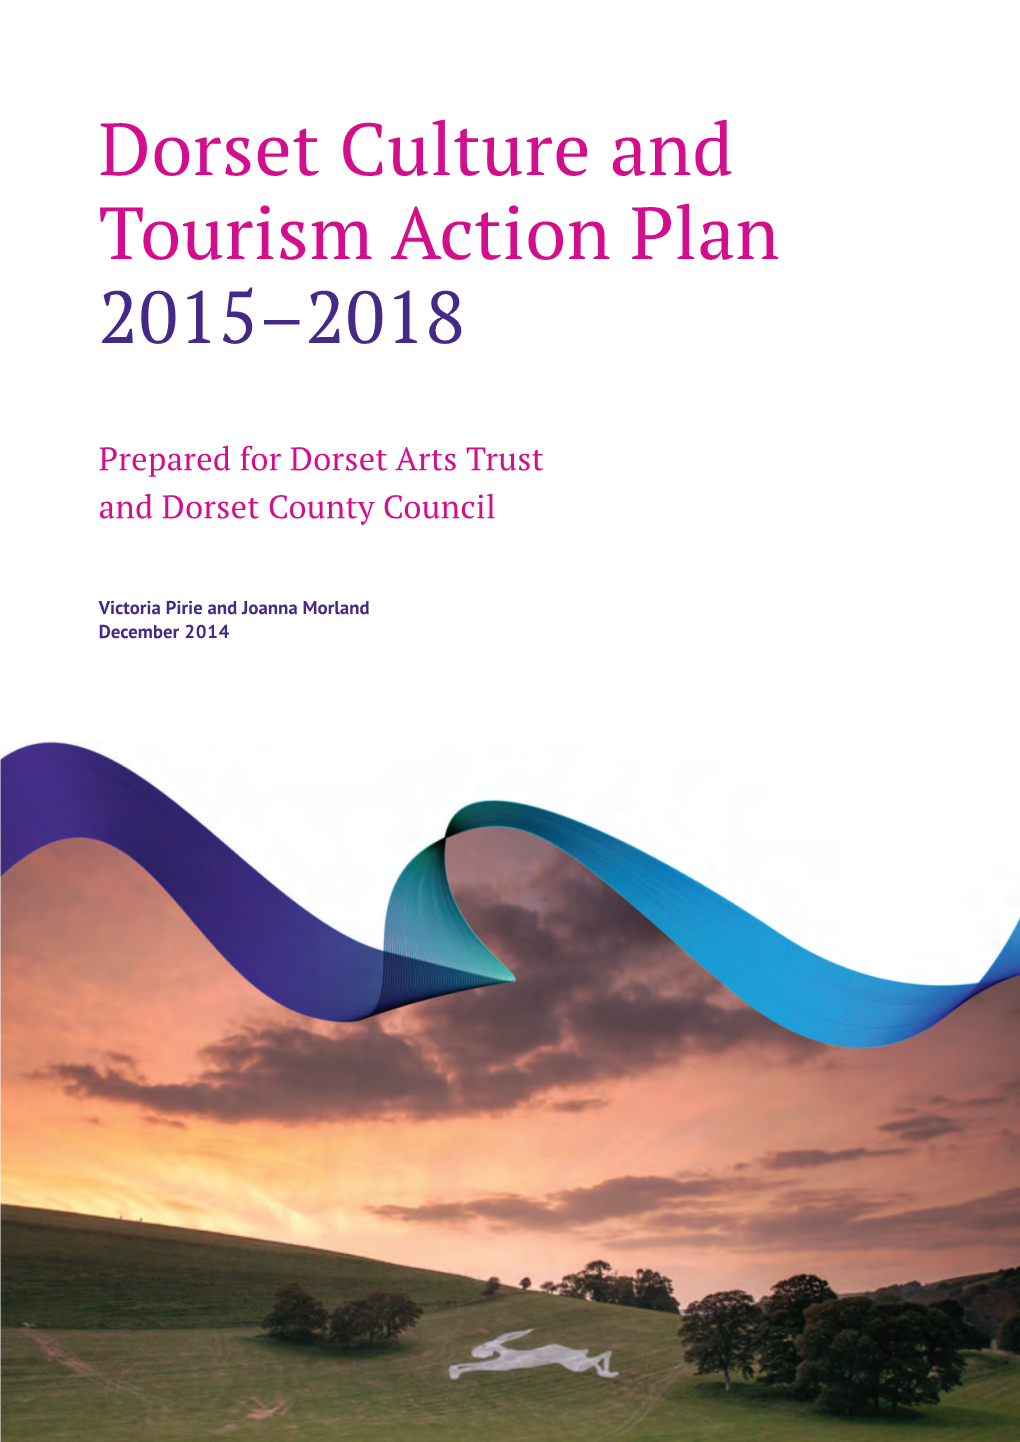 Dorset Culture and Tourism Action Plan Report